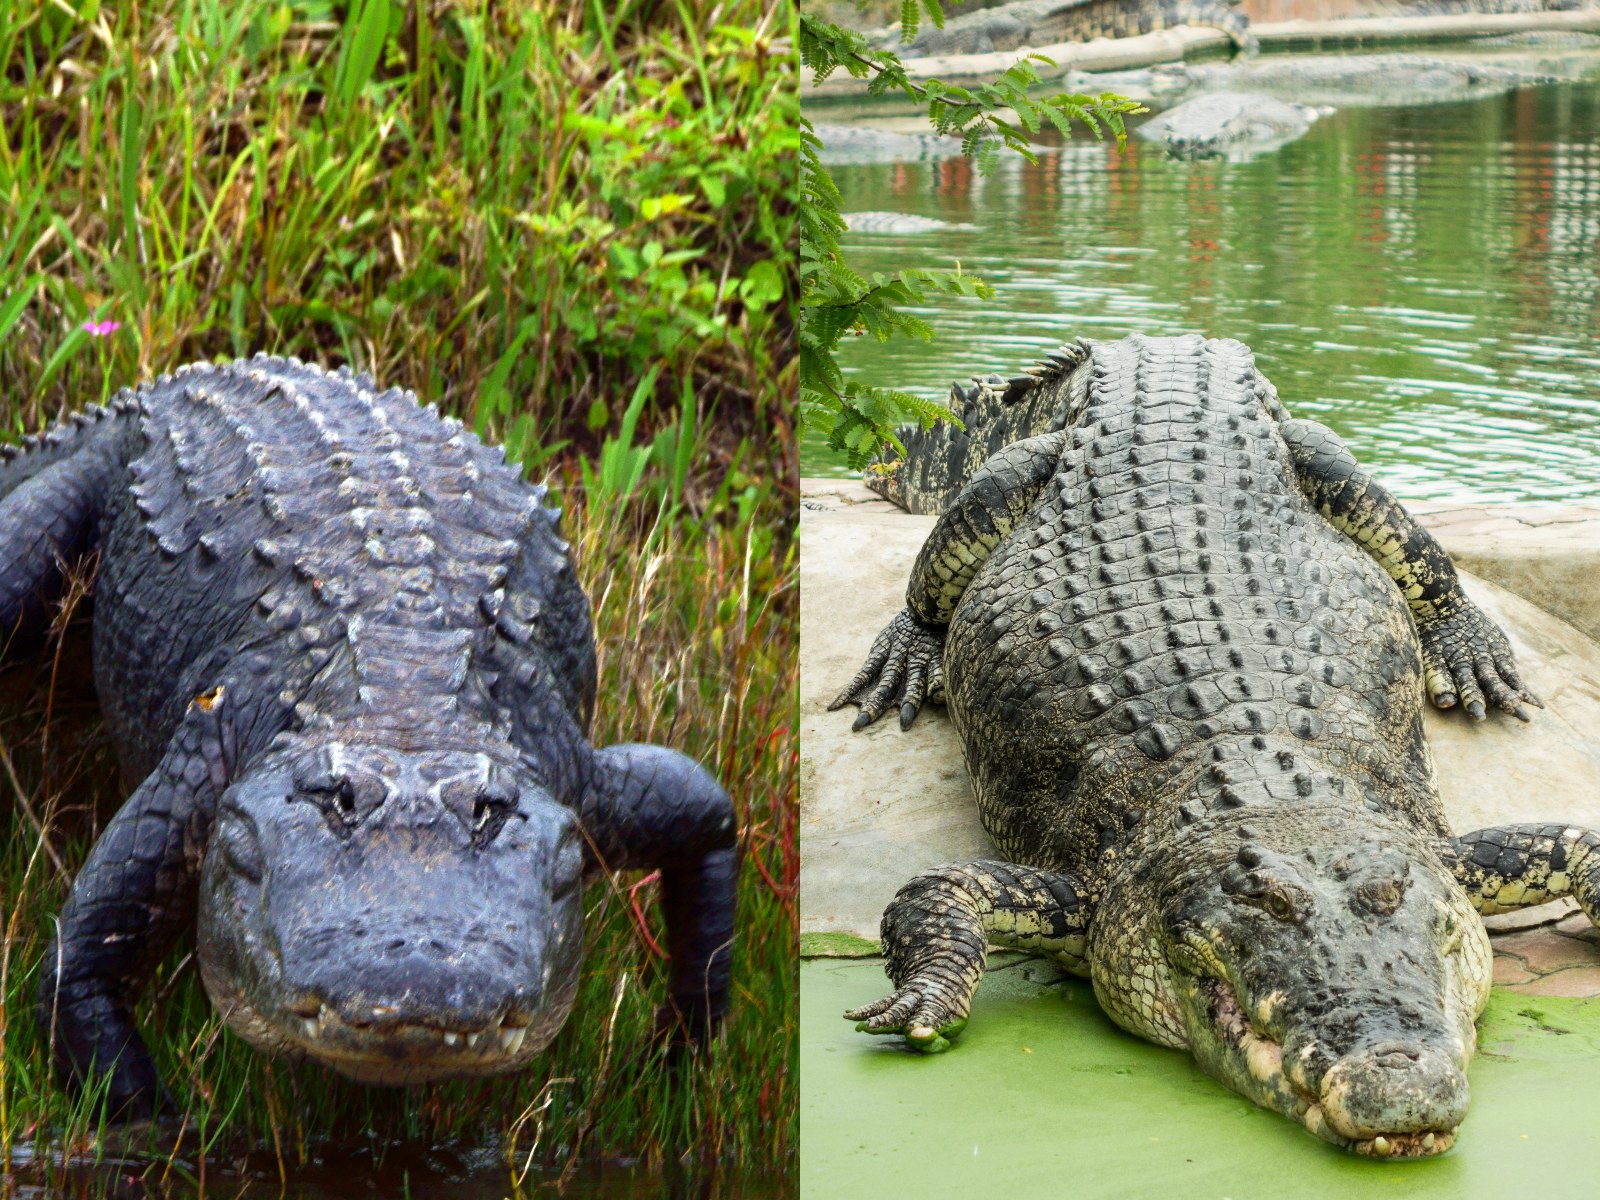 Alligator vs. Crocodile, Who Would Win?